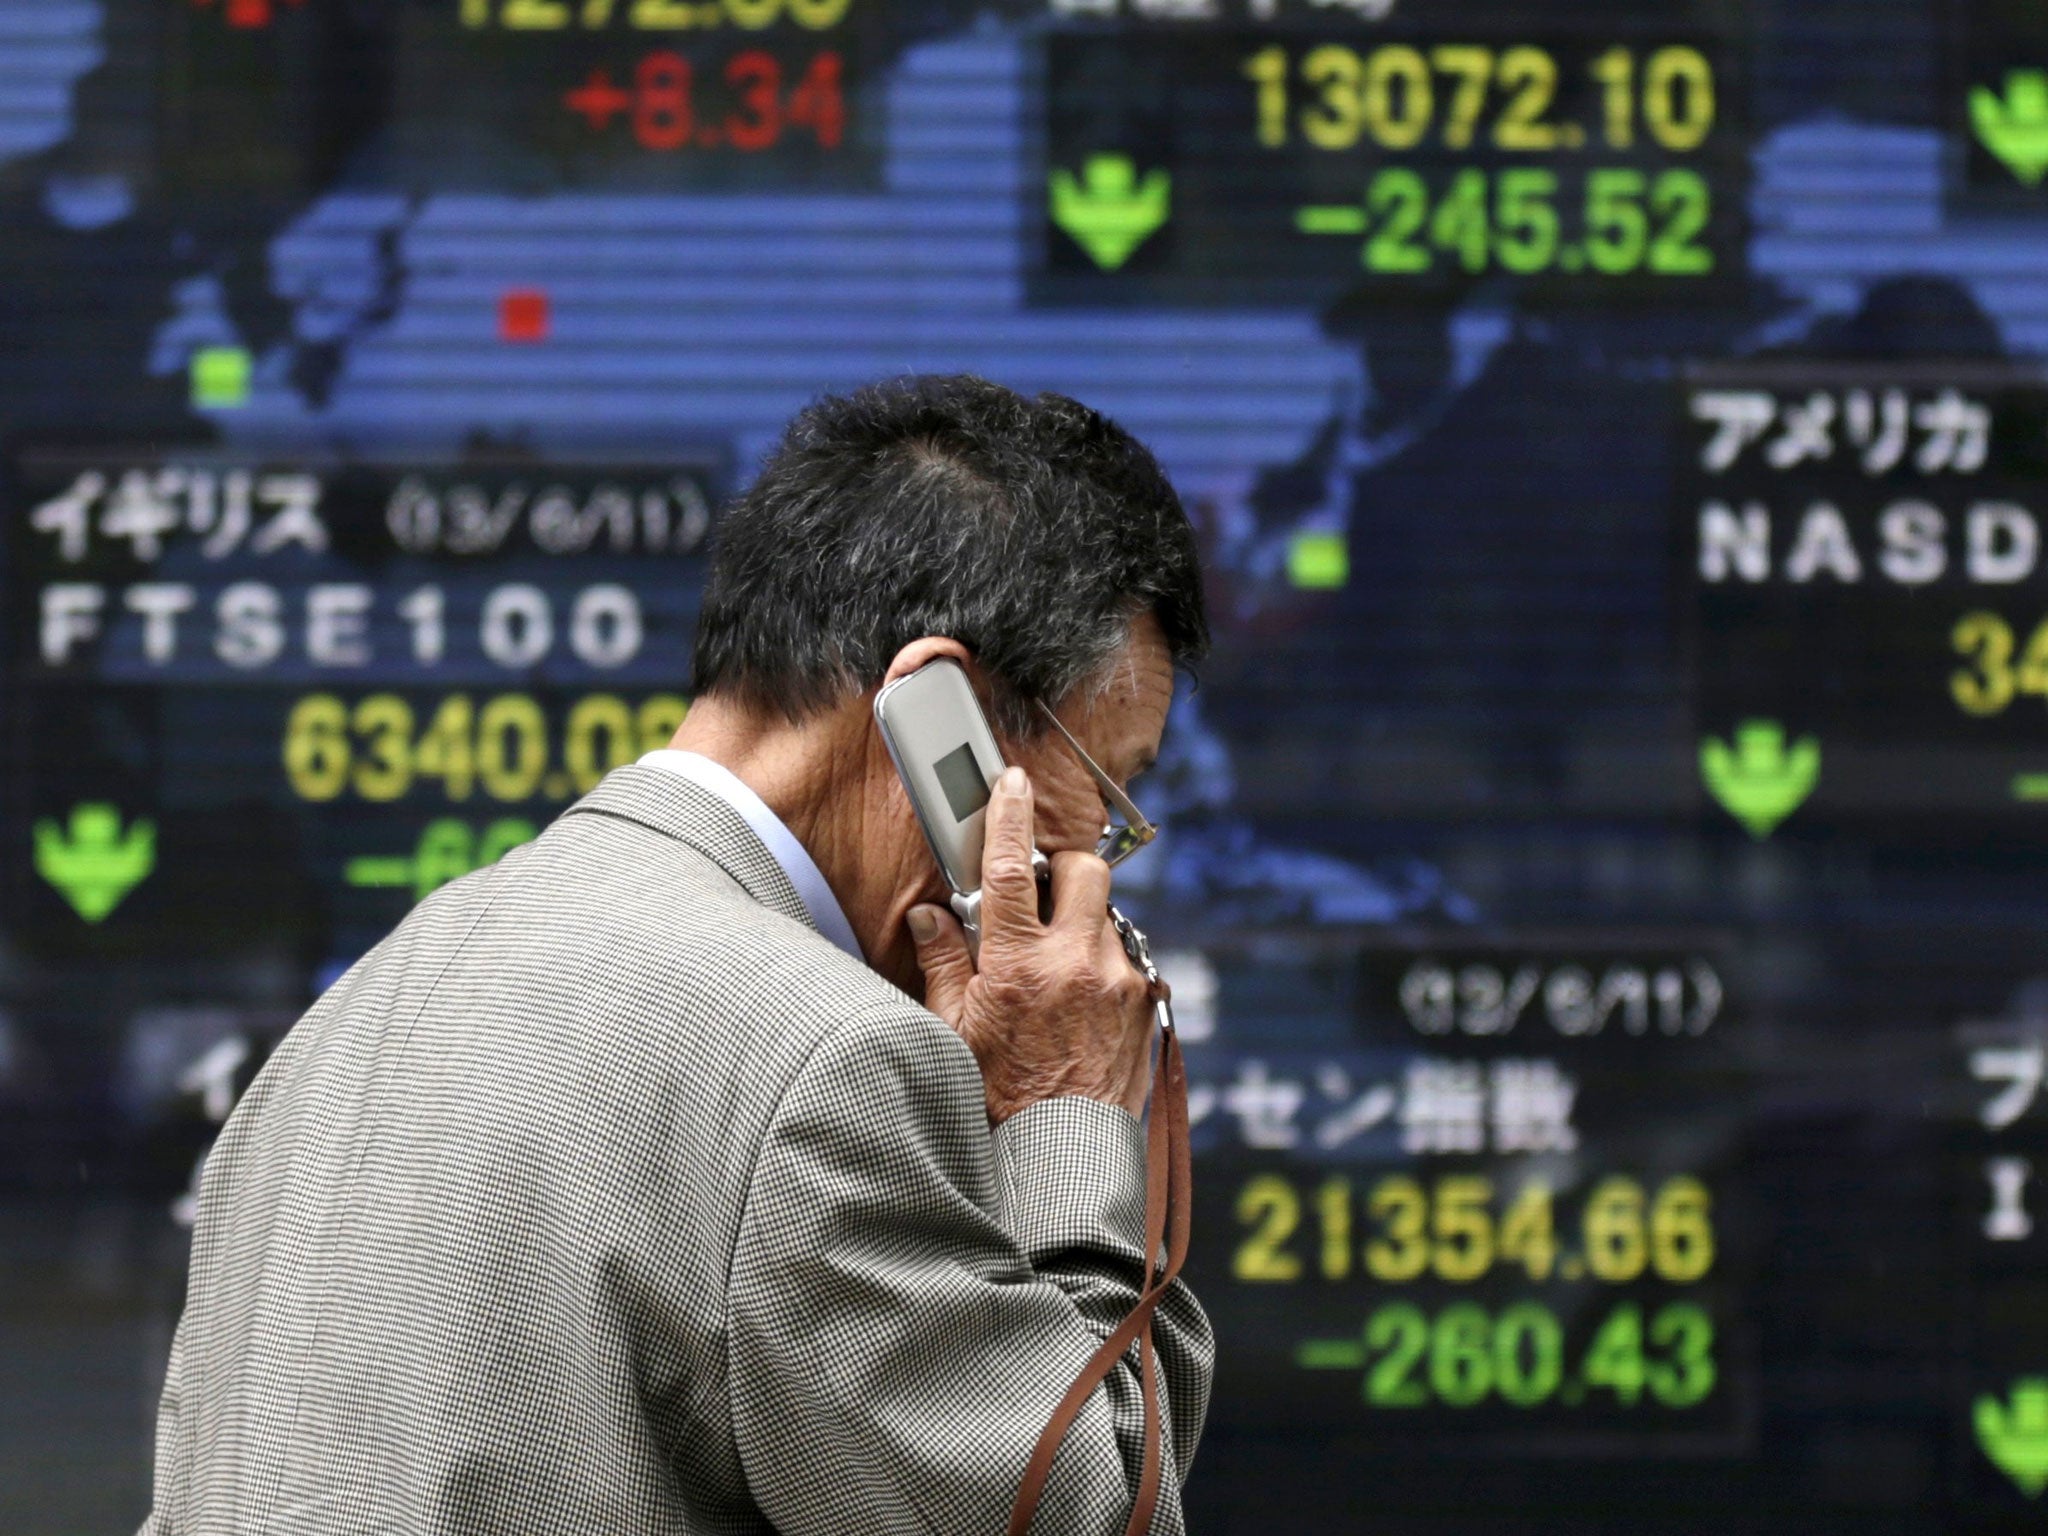 Global markets have fallen, but Investors should not be put off